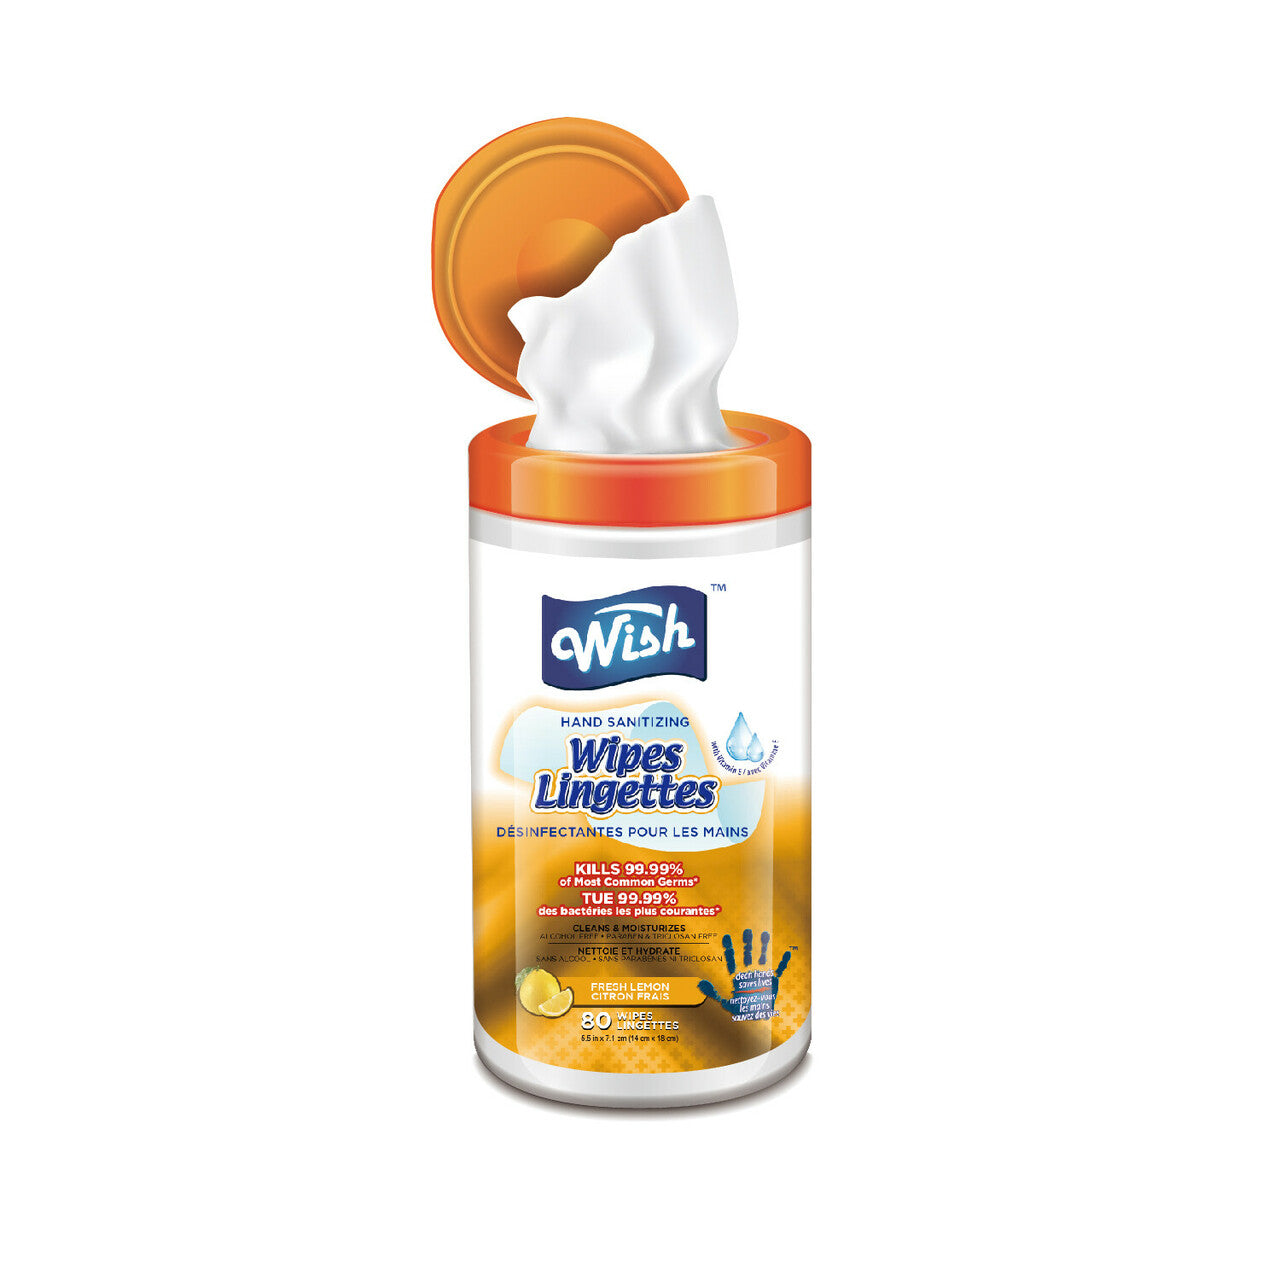 Wish Hand Sanitizer Wipes Lingettes (Cylinder Size) (80 ct) - Lemon (84 Cases = 1008 ct. per Pallet) (Unit Price - $1)